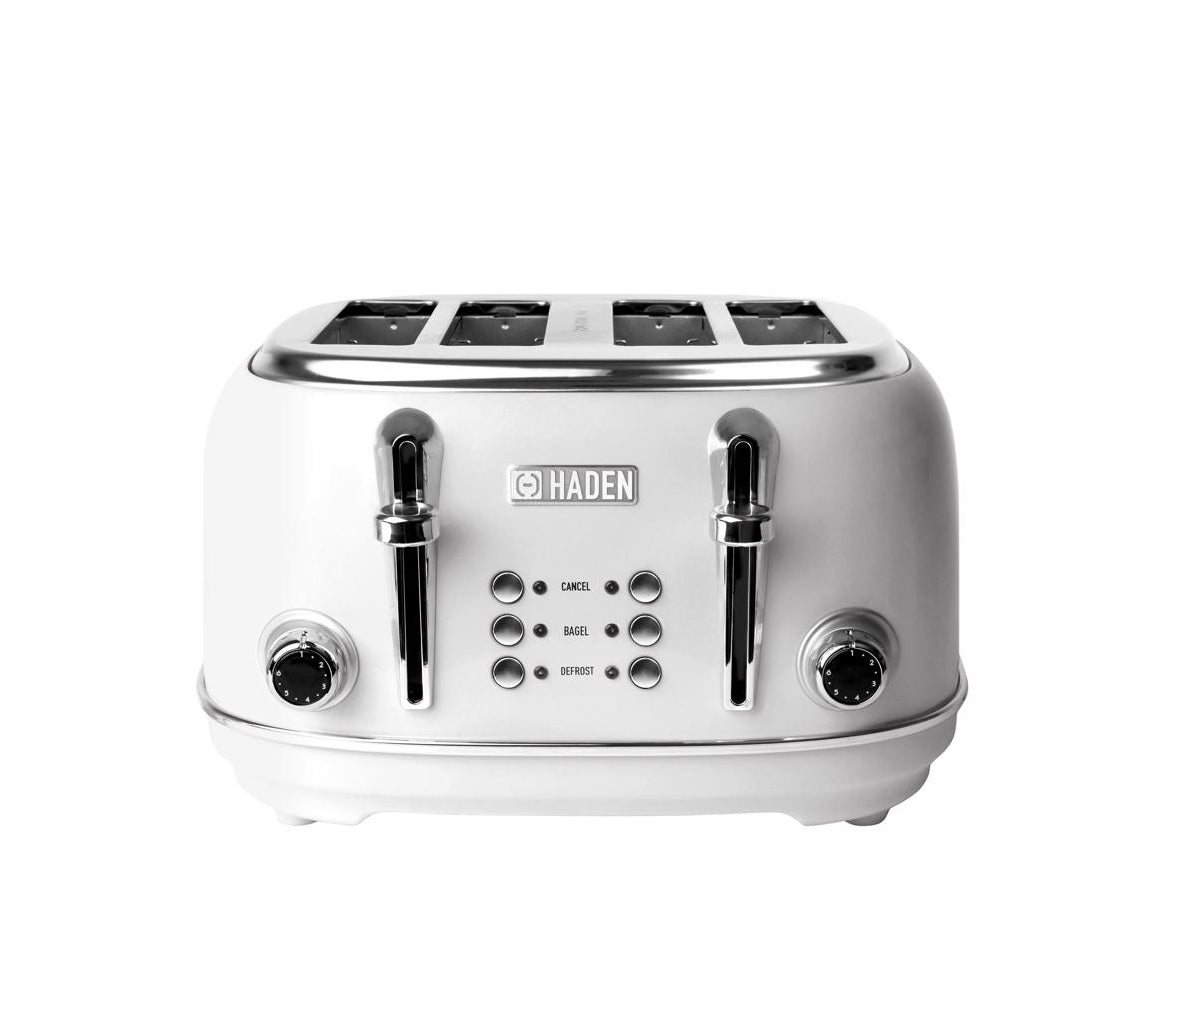 Haden 75013 Heritage 4 Slot Toaster, Stainless Steel, White